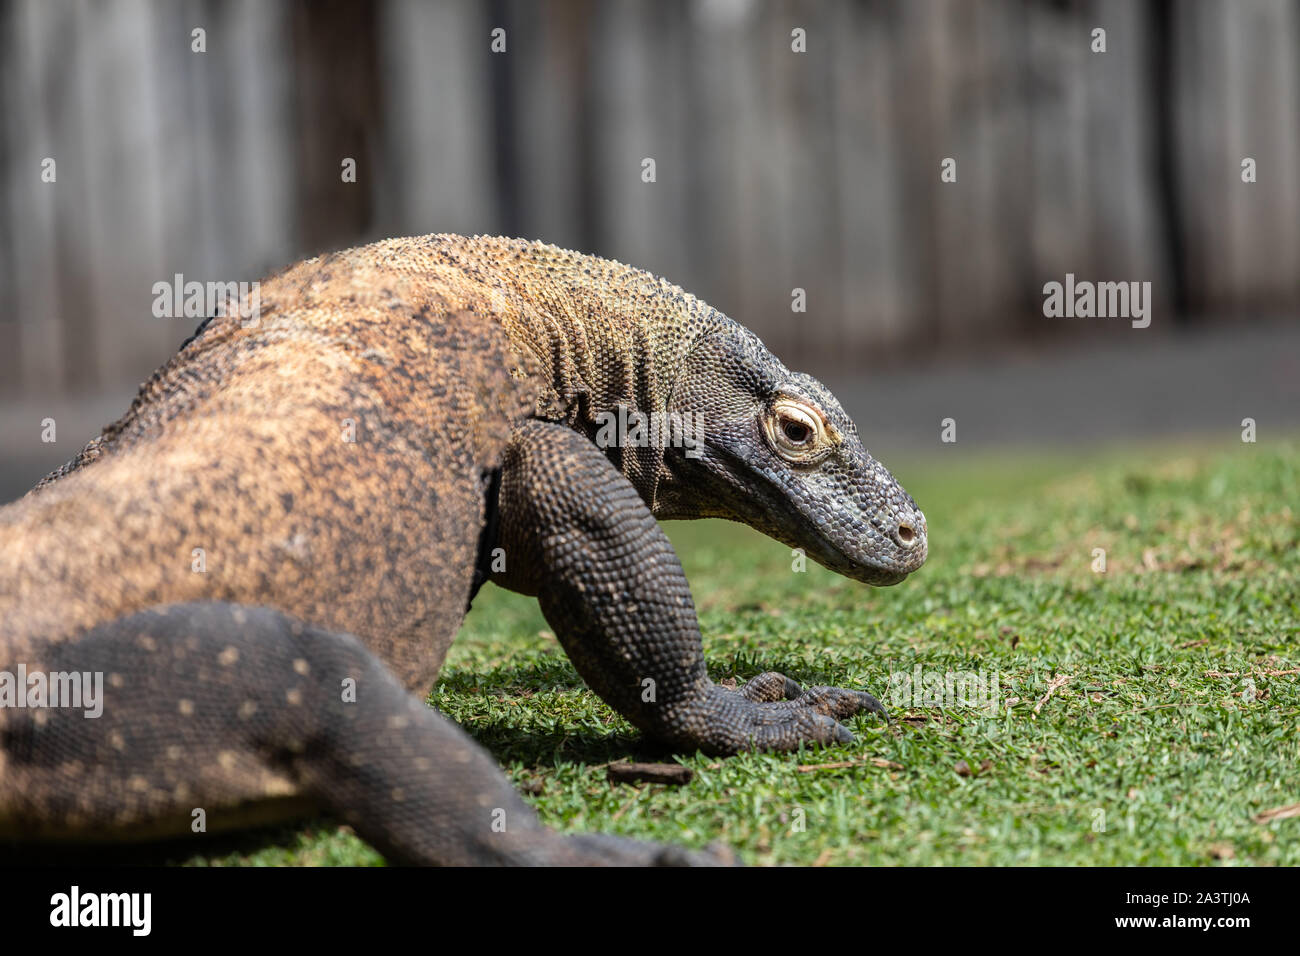 Close up of a Komodo Dragon prowling Stock Photo